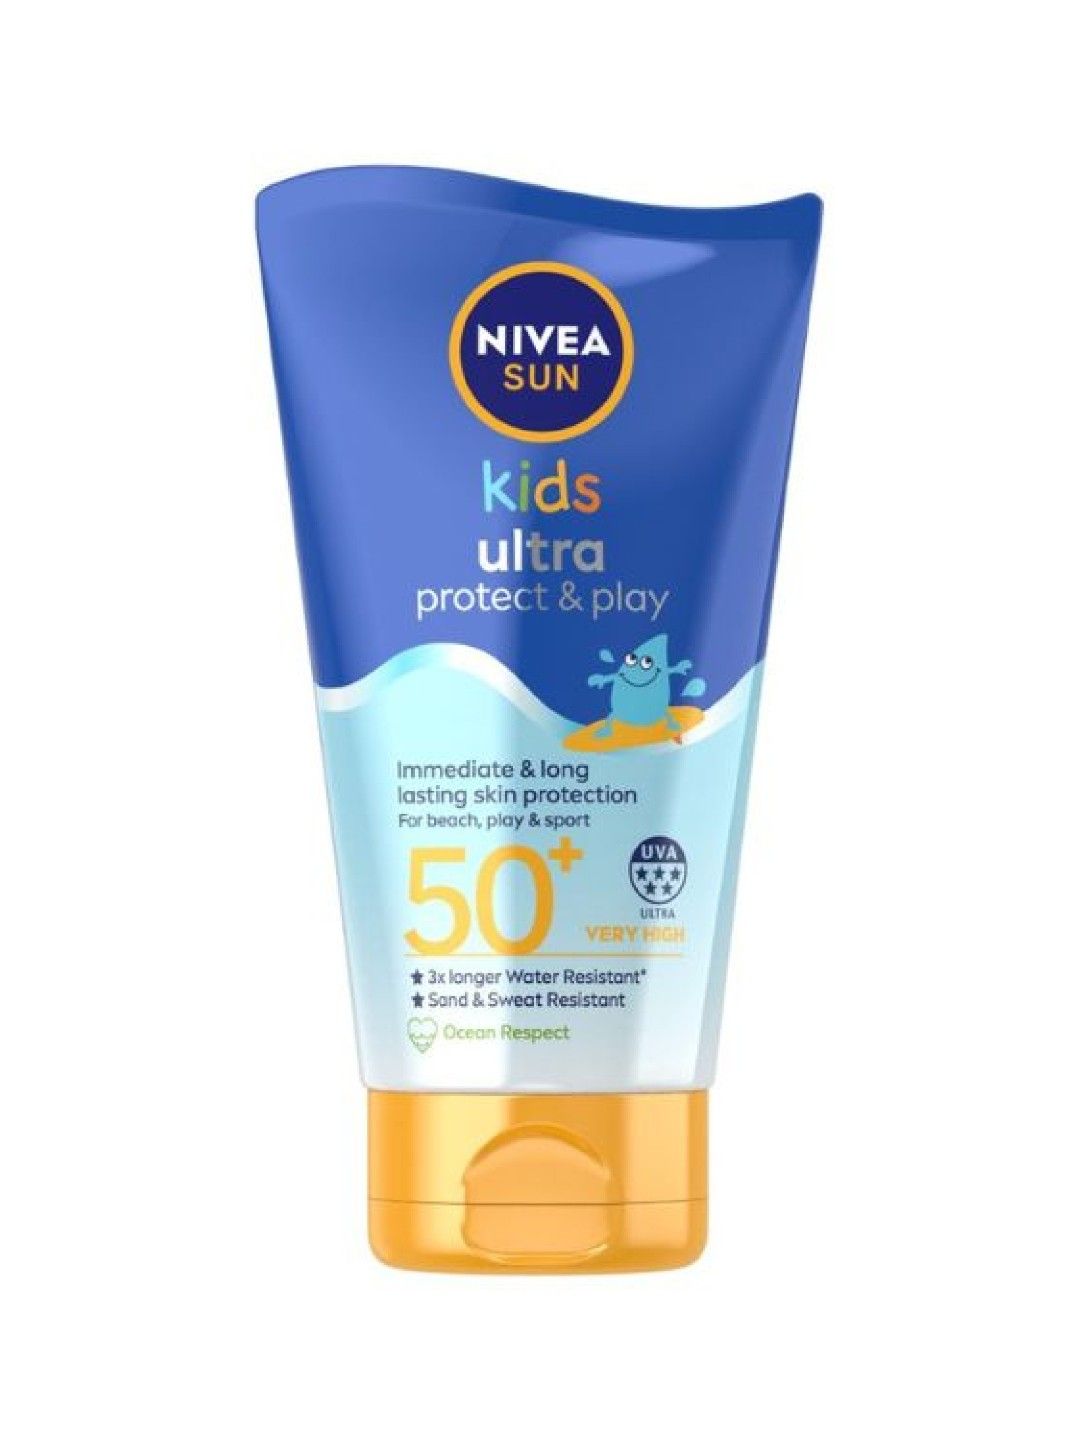 NIVEA Sun Kids Ultra Protect & Play Lotion w/ SPF 50, Sunscreen for Kids, 150ml (No Color- Image 1)